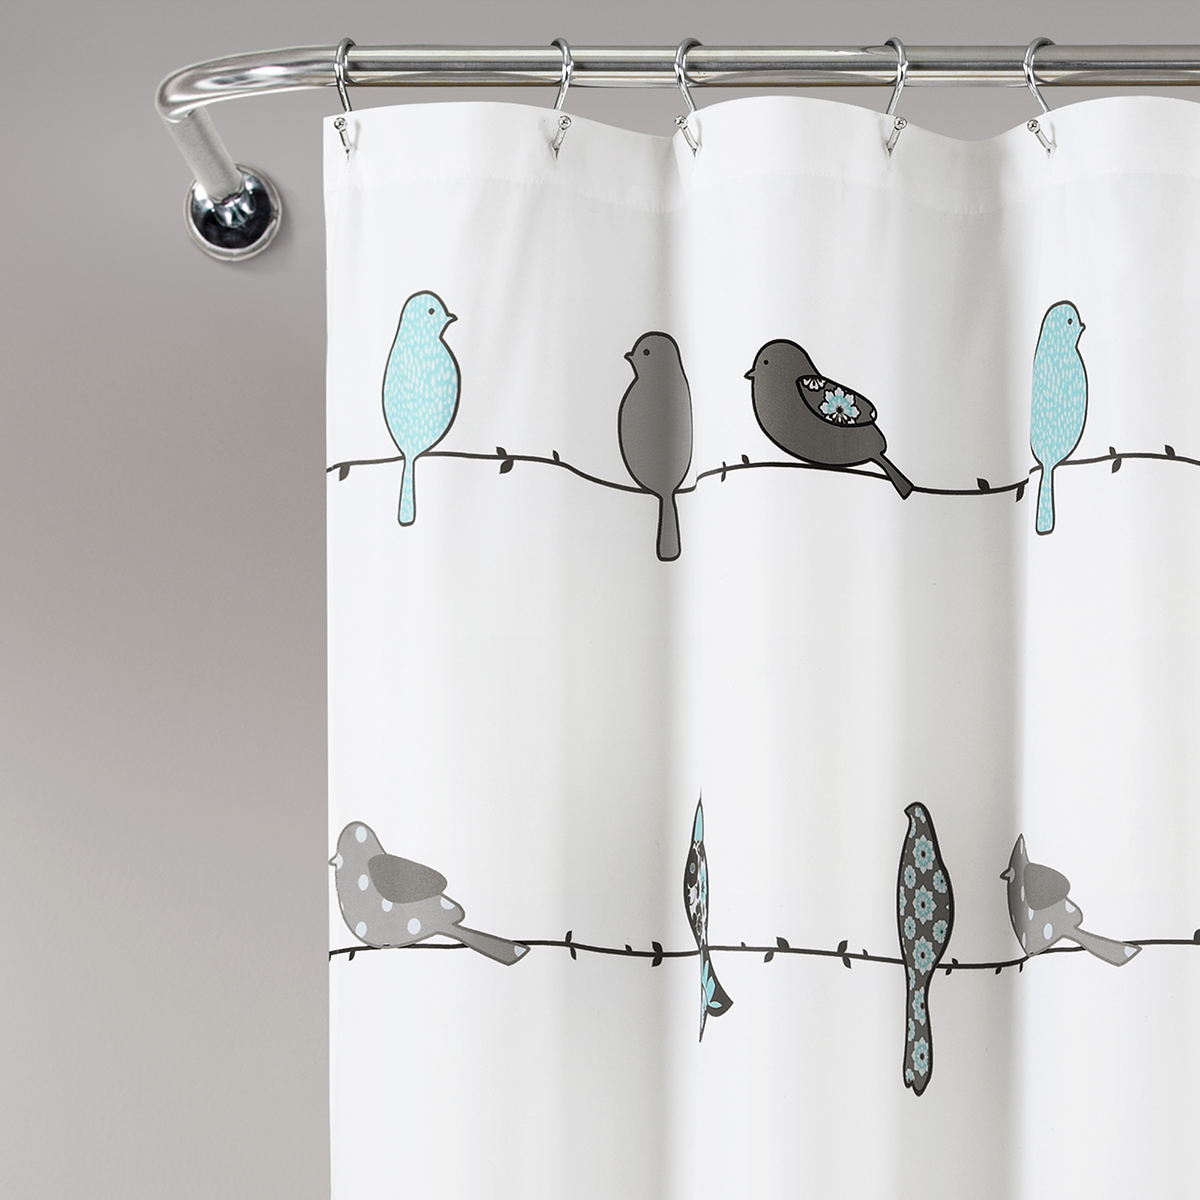 Lush Decor(R) Rowley Birds Shower Curtain